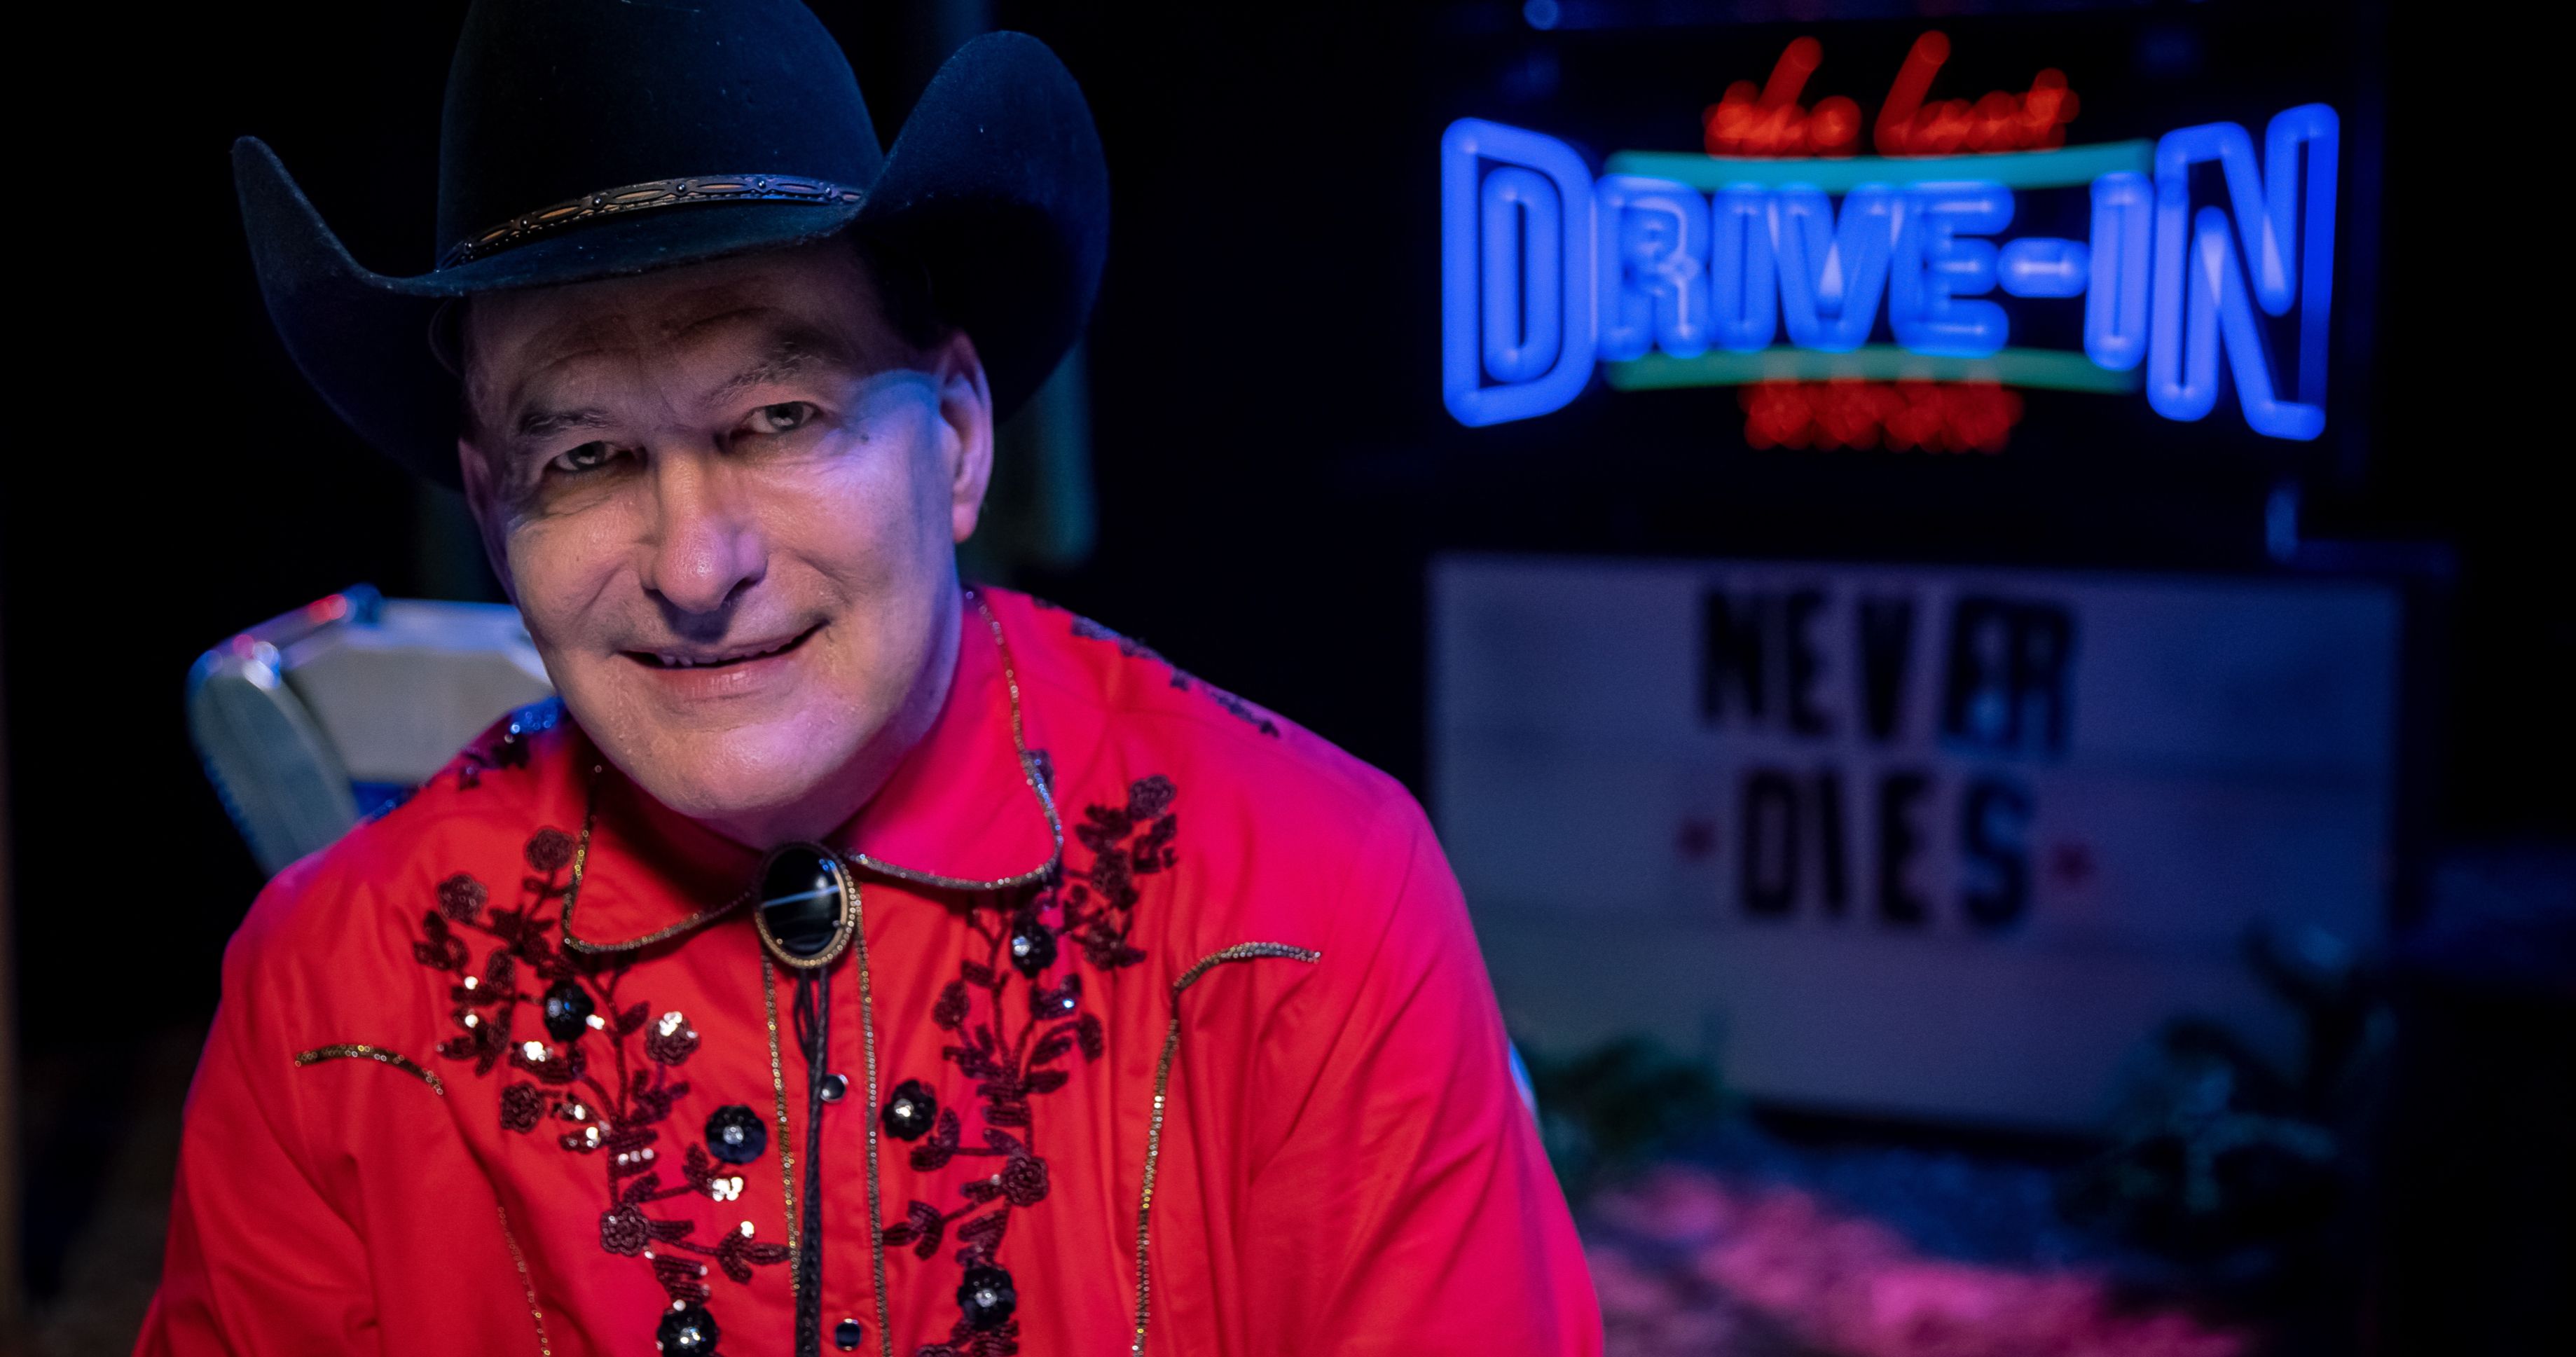 The Last Drive-In with Joe Bob Briggs Renewed for Season 3 on Shudder